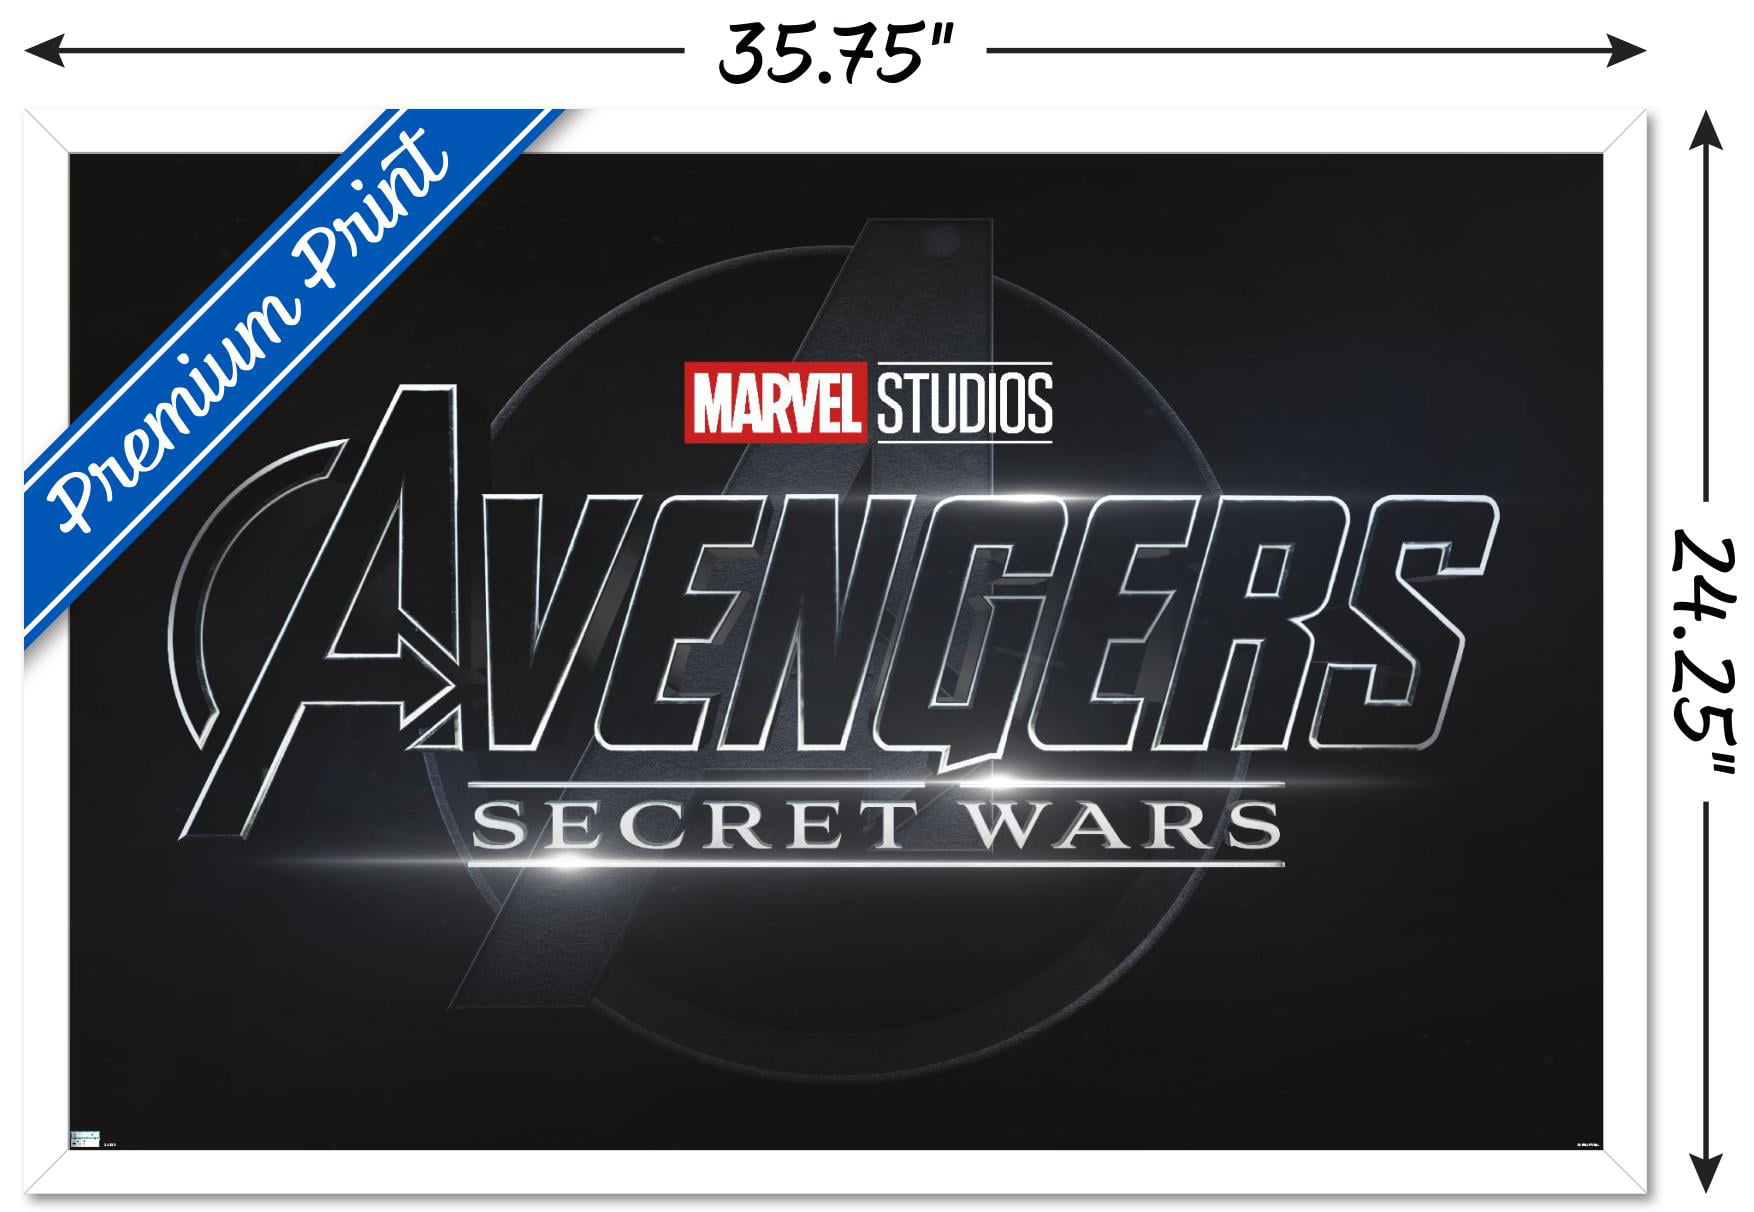 Marvel Comics - Secret Invasion - Avengers: The Initiative #15 Wall Poster,  22.375 x 34 Framed 